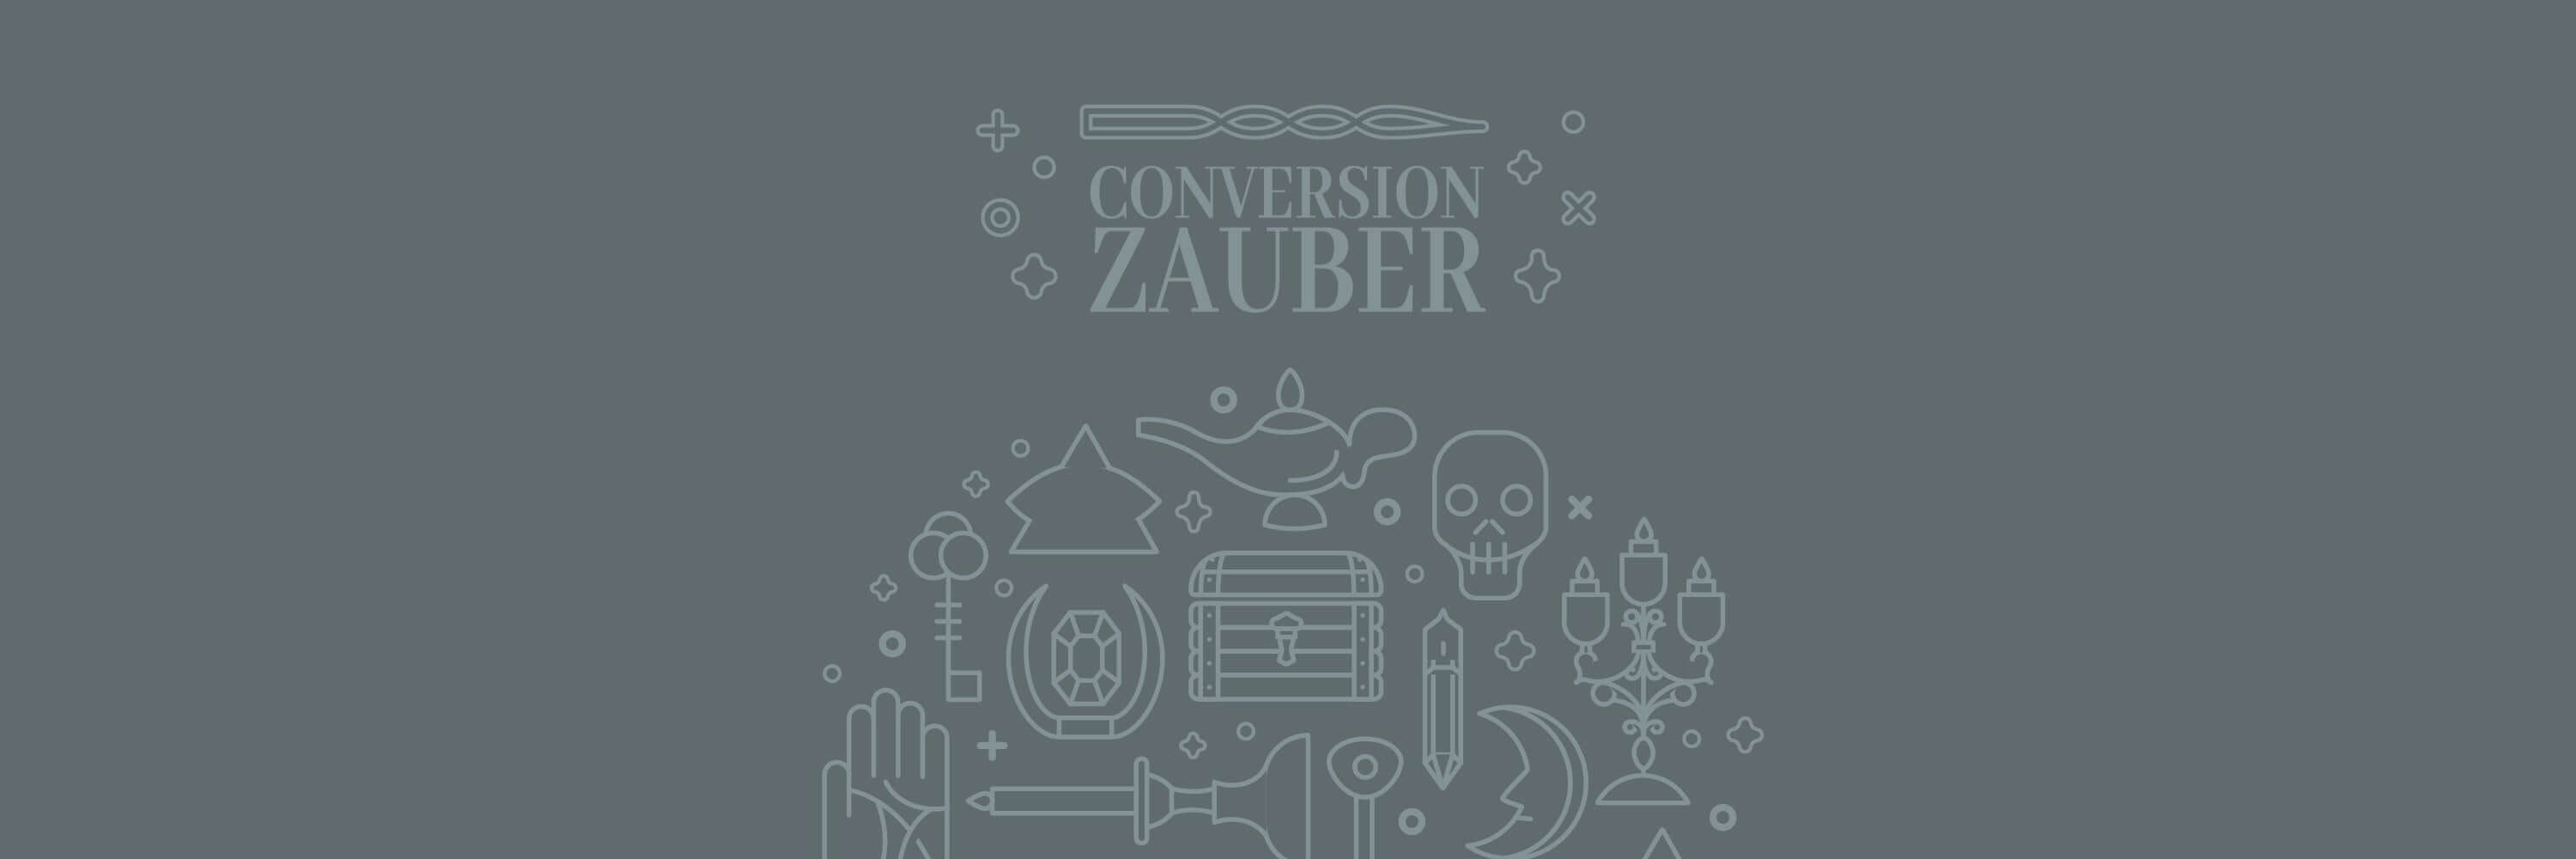 Conversionzauber-Seo-Contest-Agenturtipp-de-famprints-Logo